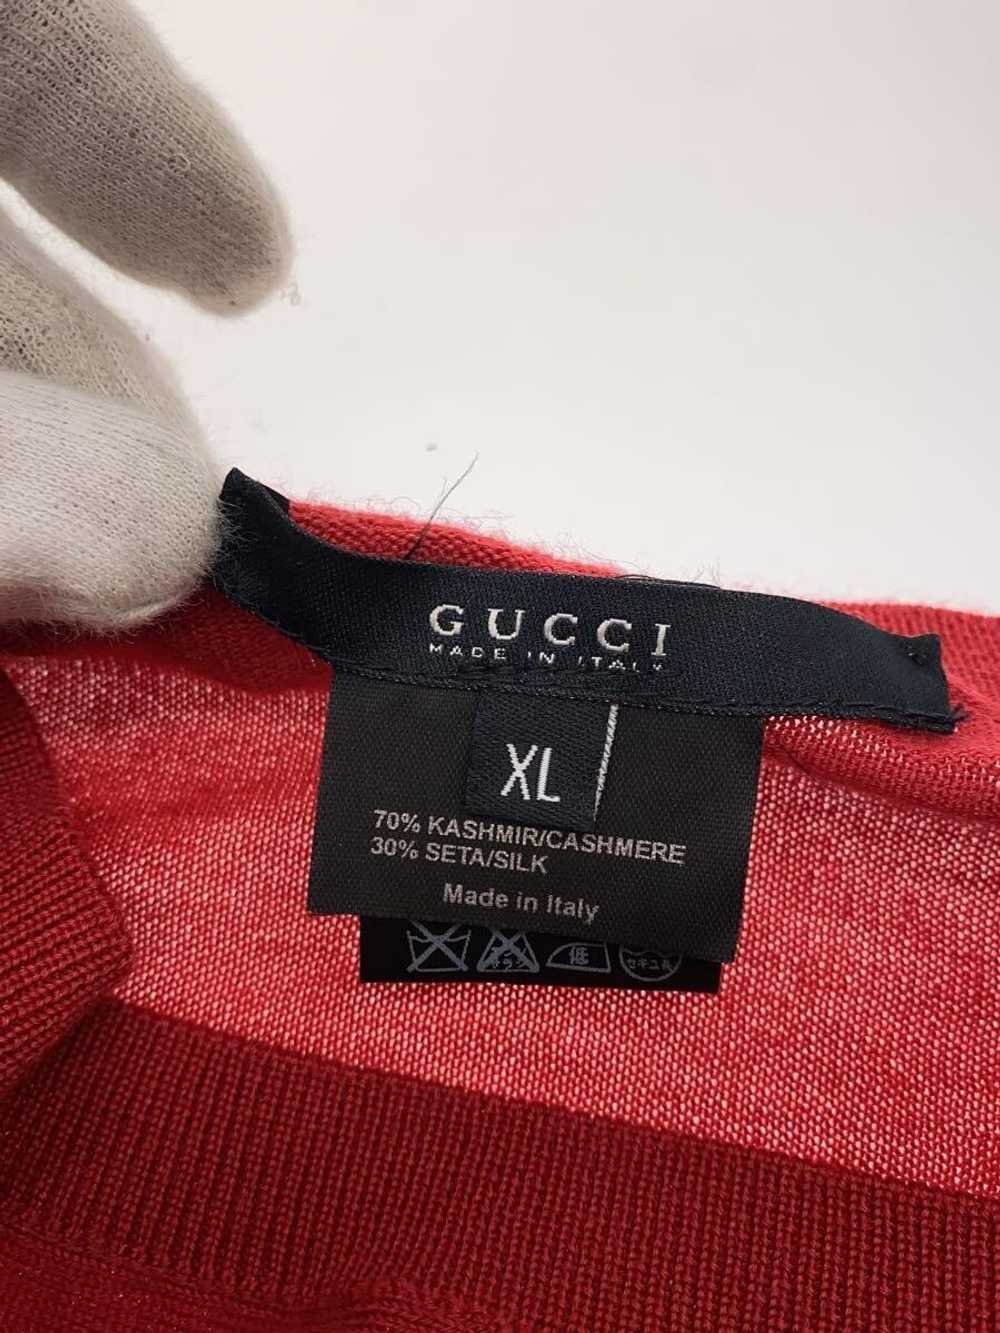 Gucci Tom Ford/Tom Ford Period/Cashmere Silk/Swea… - image 3